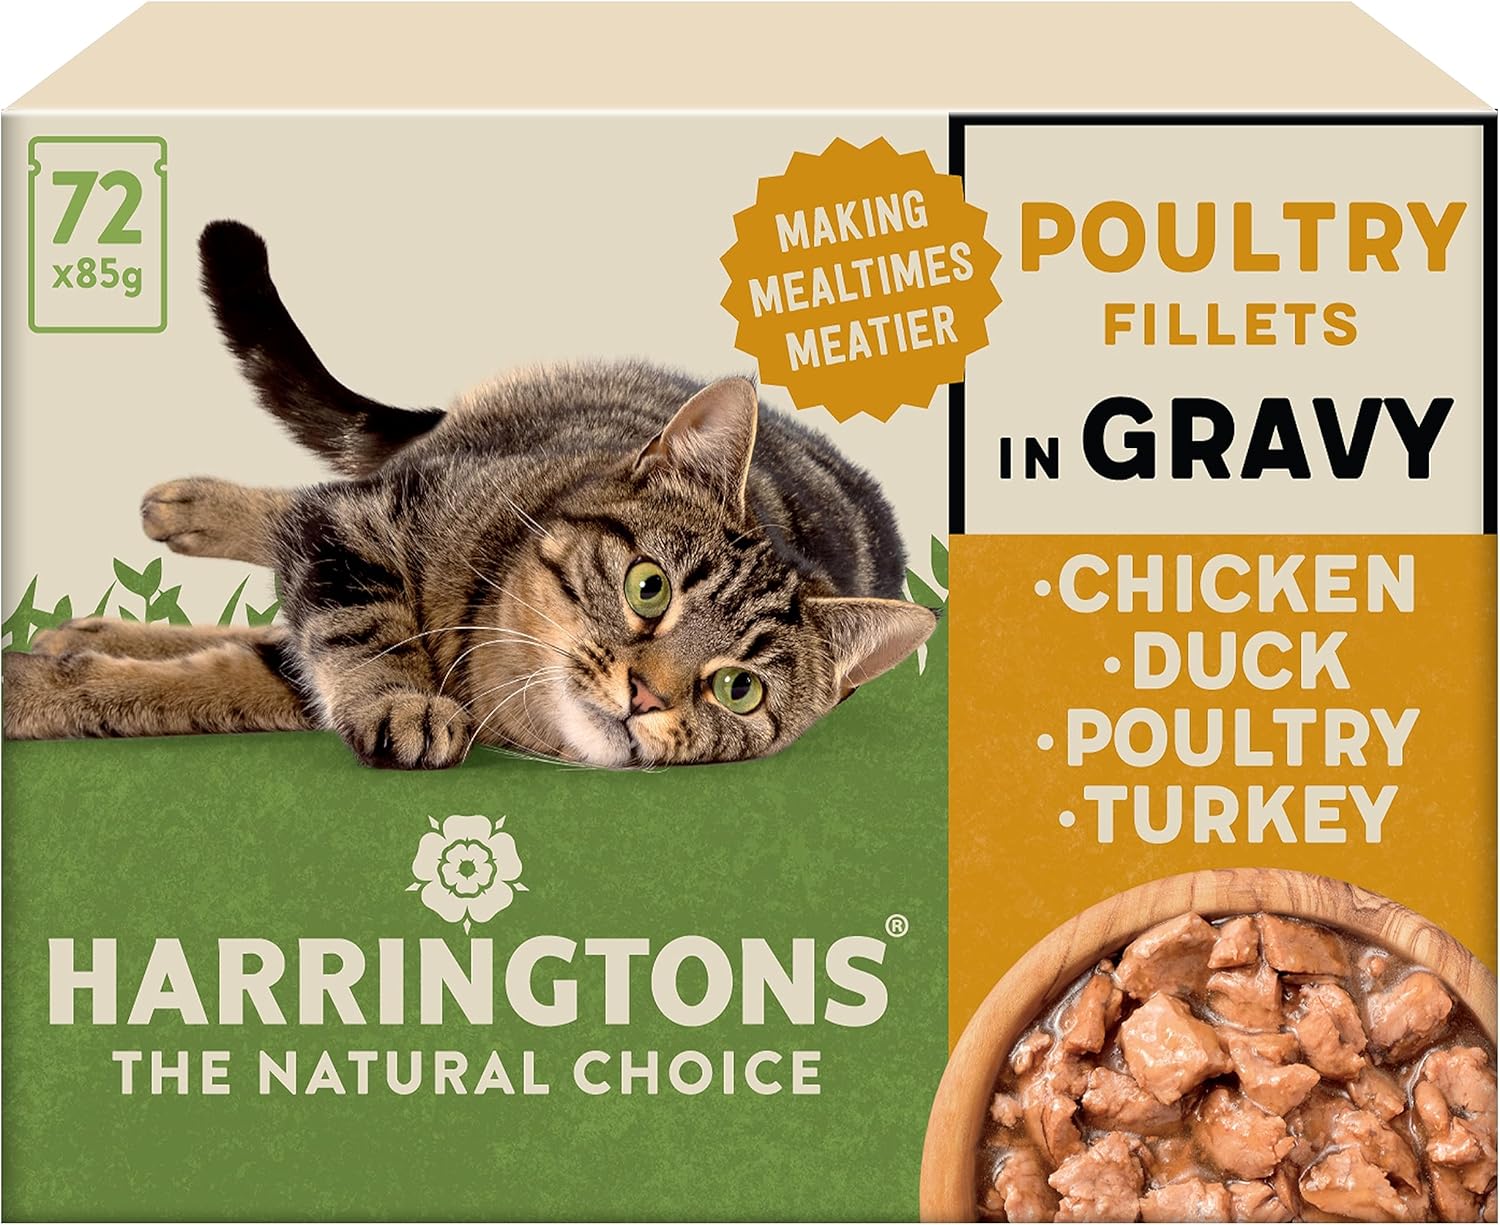 Harringtons Complete Wet Pouch Grain Free Hypoallergenic Adult Cat Food Poultry in Gravy Pack 72x85g - Chicken, Duck, Poultry & Turkey - Making Mealtimes Meatier?HARRWCATPG-C85